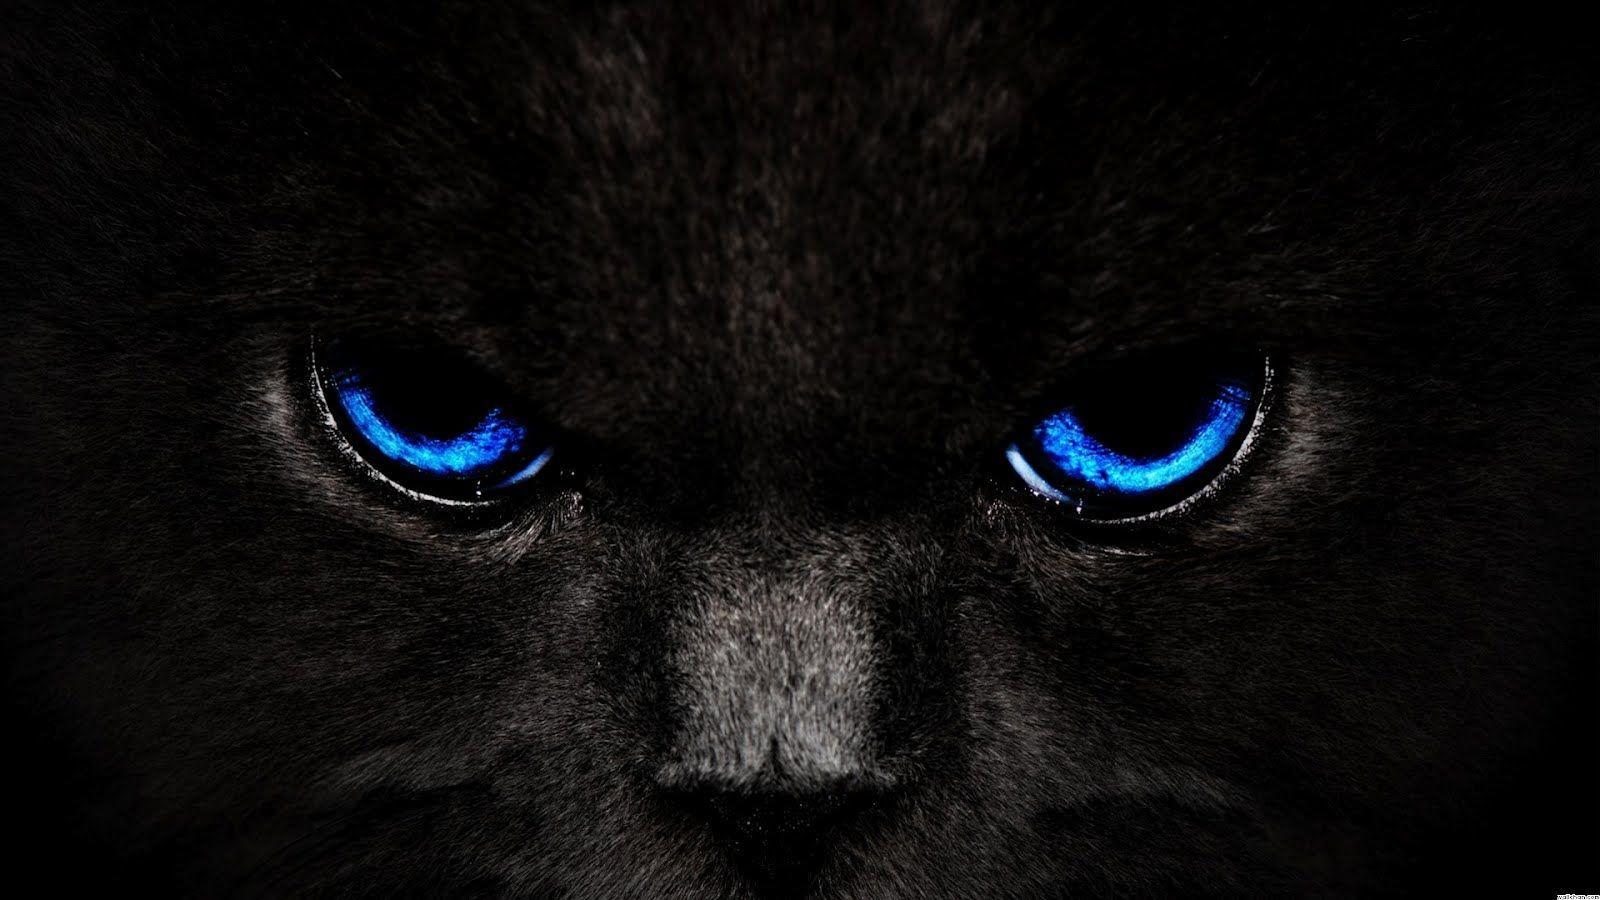 Black And Blue Background Wallpaper Black cat blue eyes wallpaper